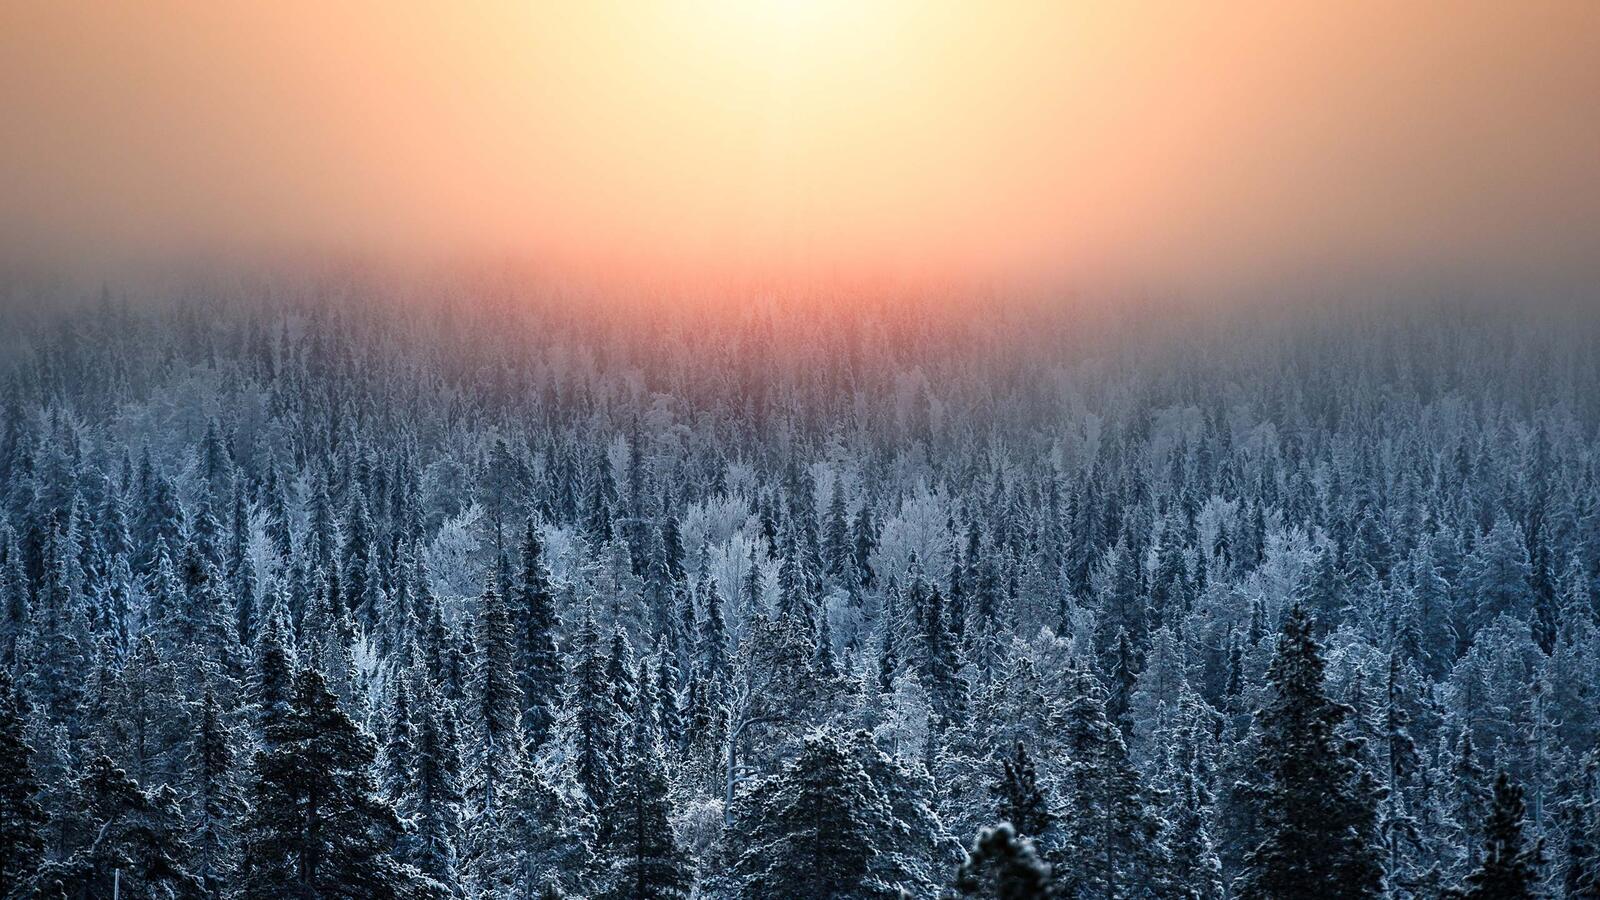 Обои лес мороз Финляндия на рабочий стол